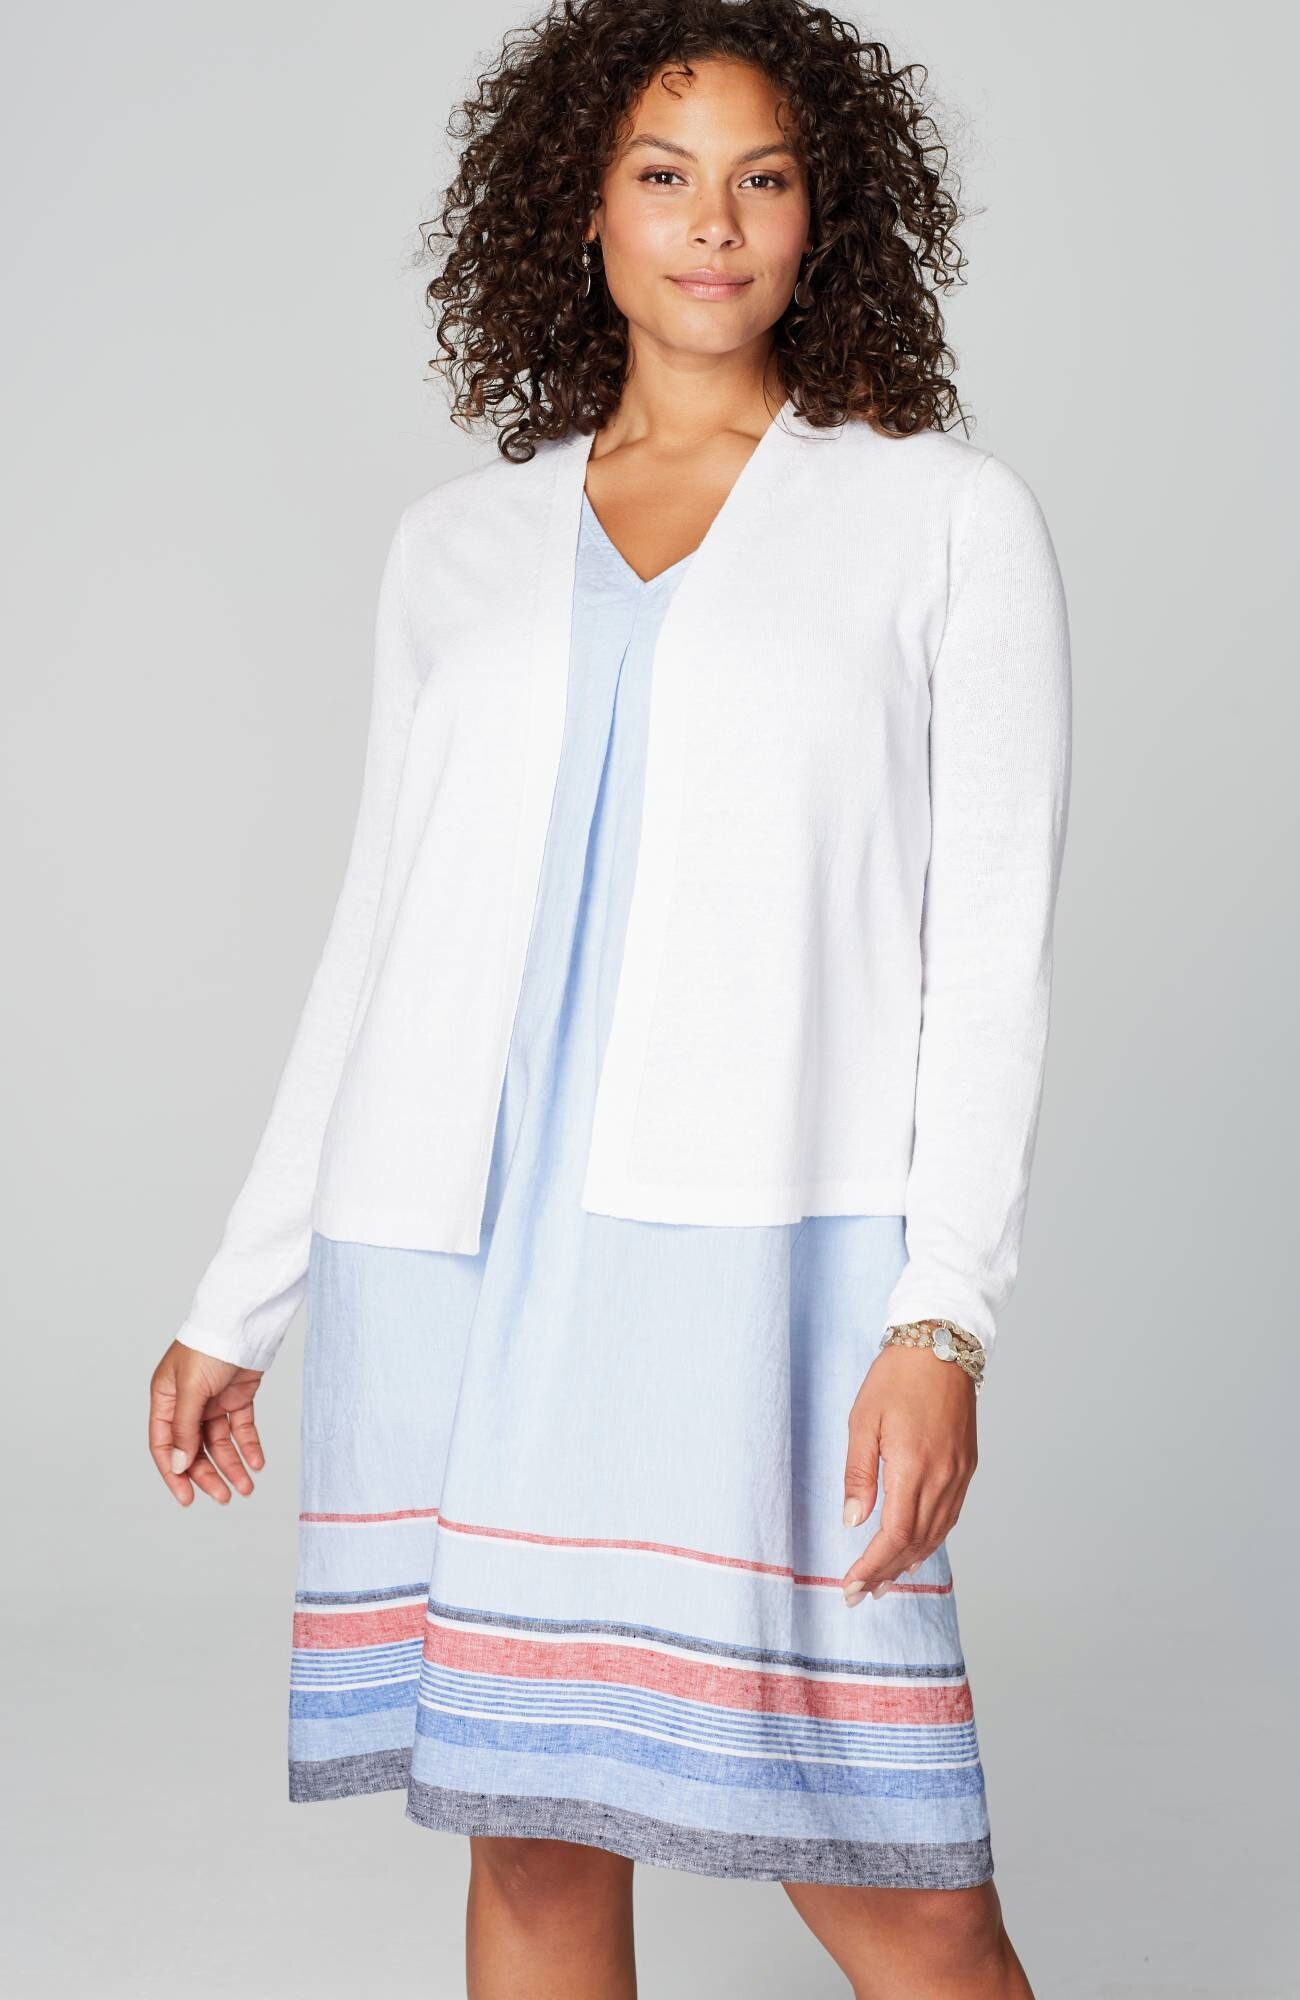 All Sizes New J Jill White Linen Multi-Seam Maxi Skirt 